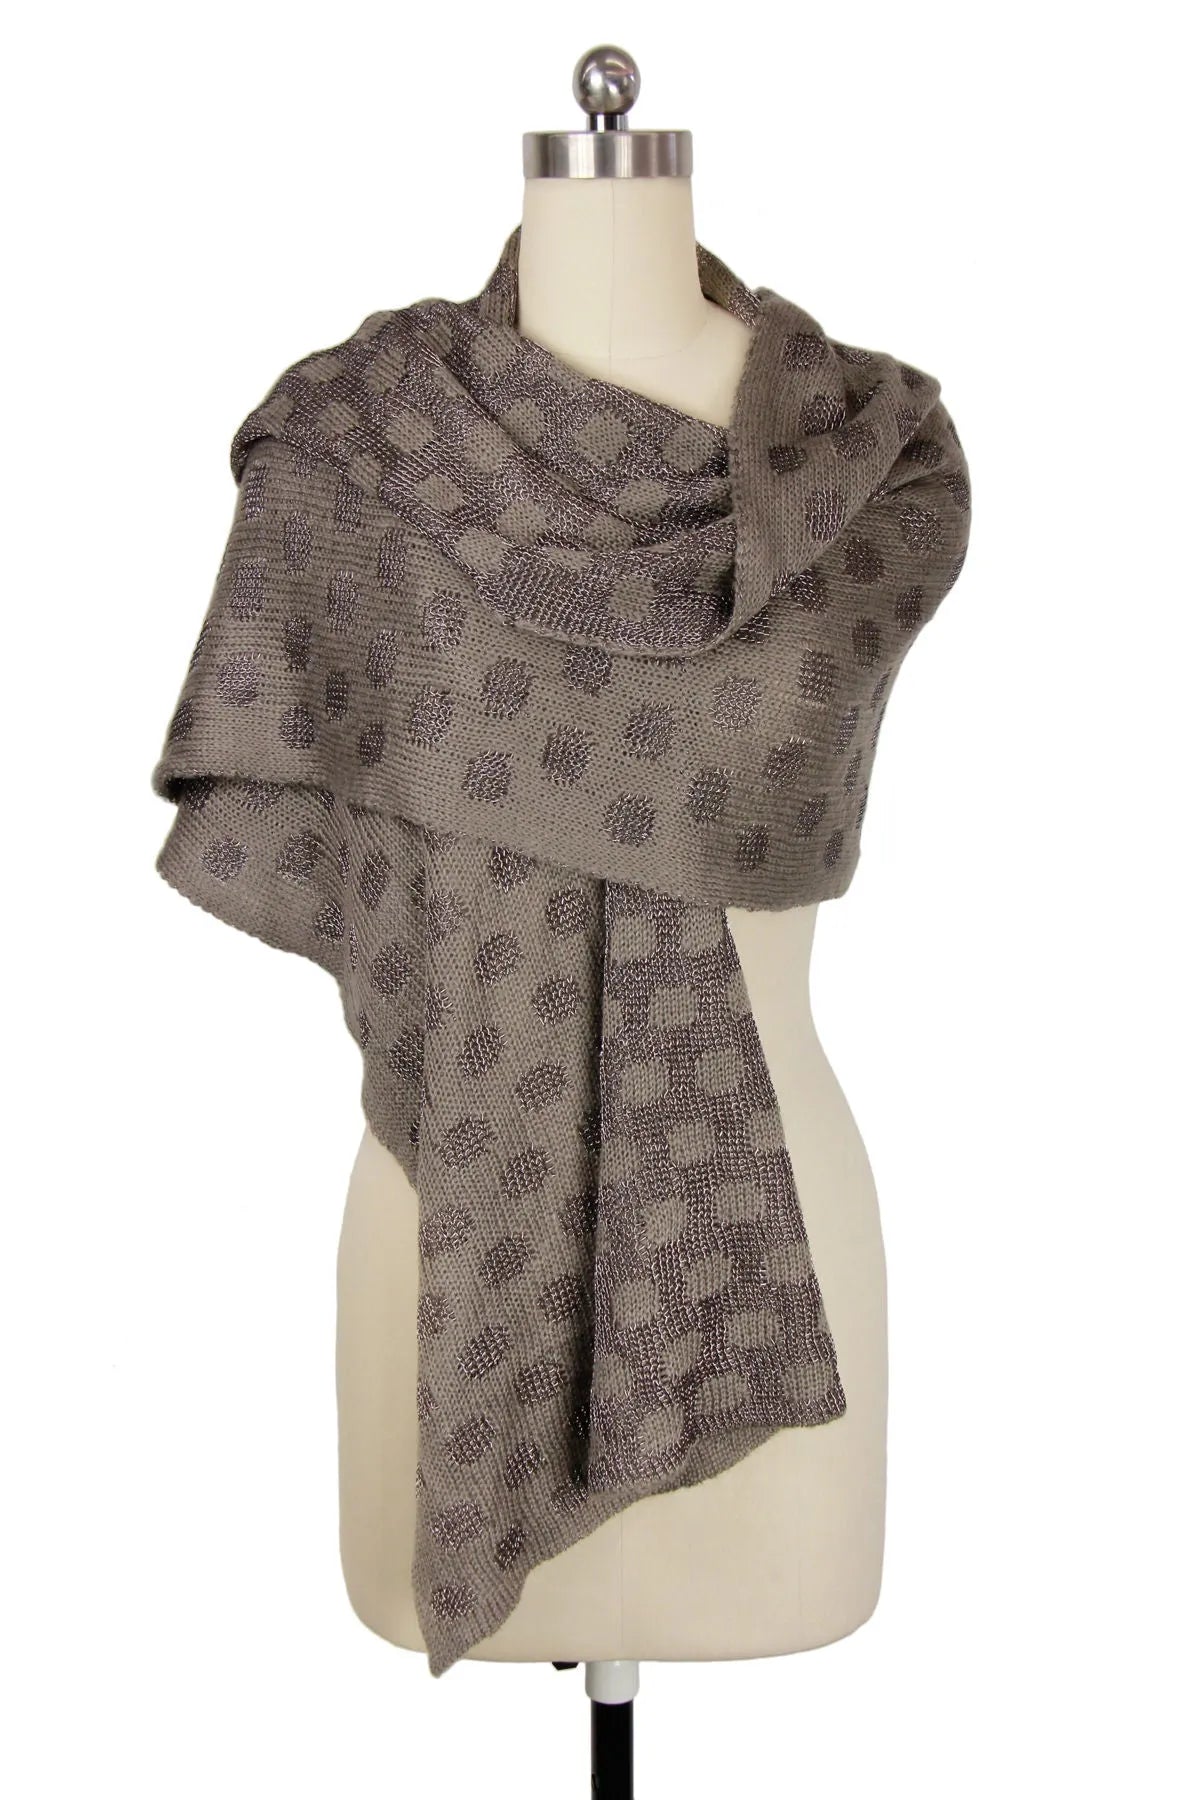 Louis Vuitton Mink Monogram Pattern Scarf - Grey Scarves and